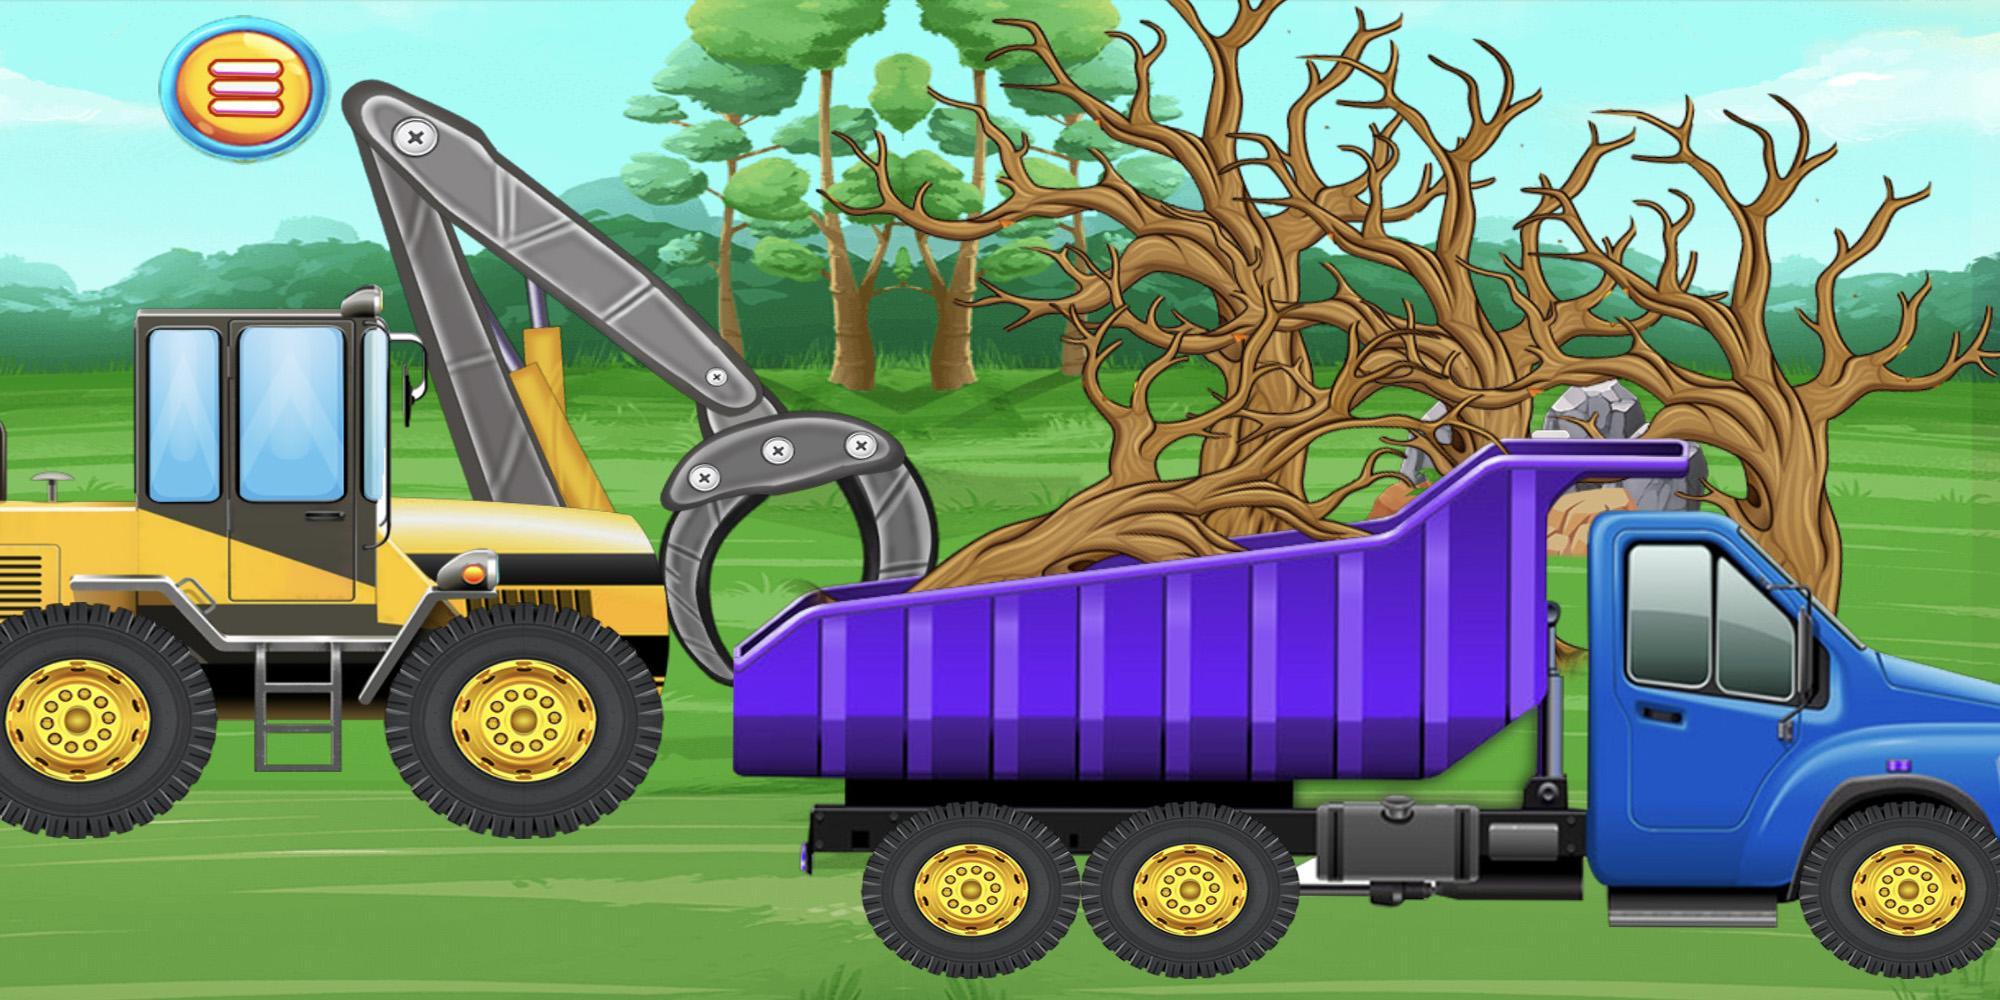 Construction Vehicles & Trucks - Games for Kids 1.9.0 Screenshot 5